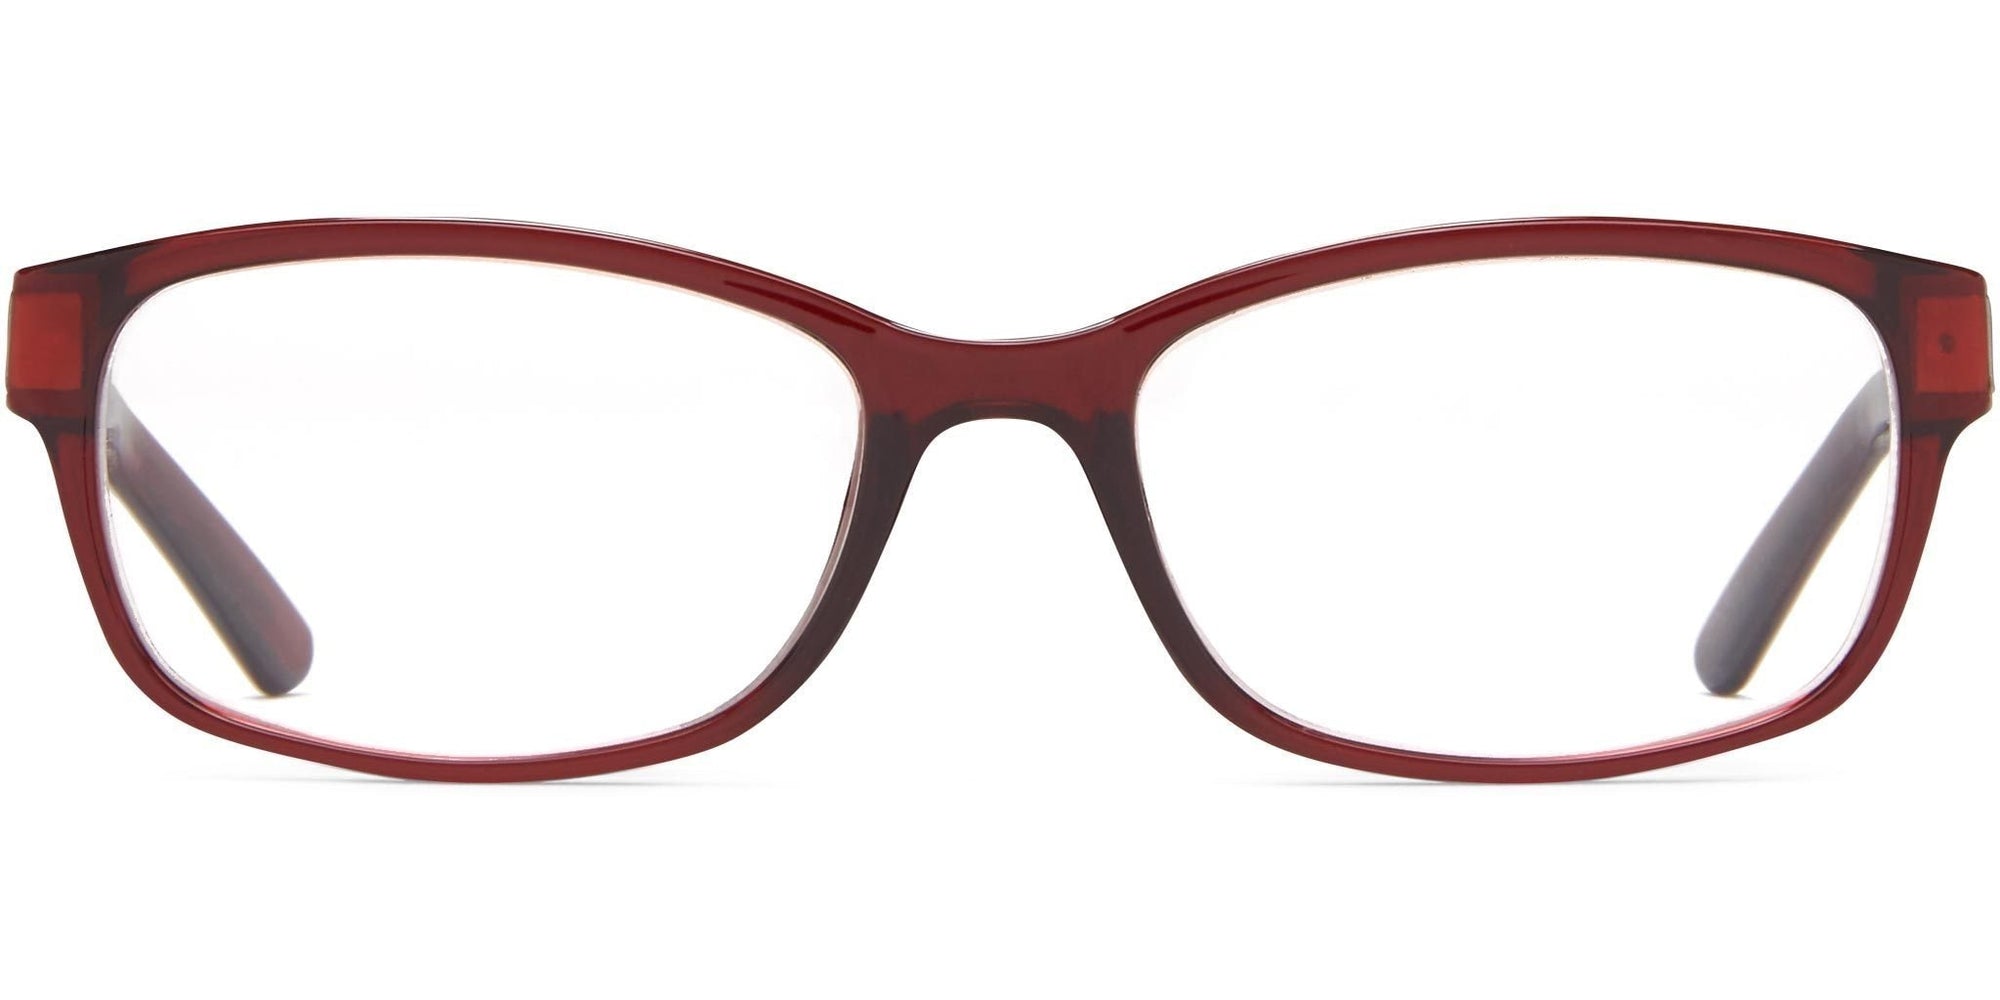 Redlands - Dark Red / 1.25 - Reading Glasses